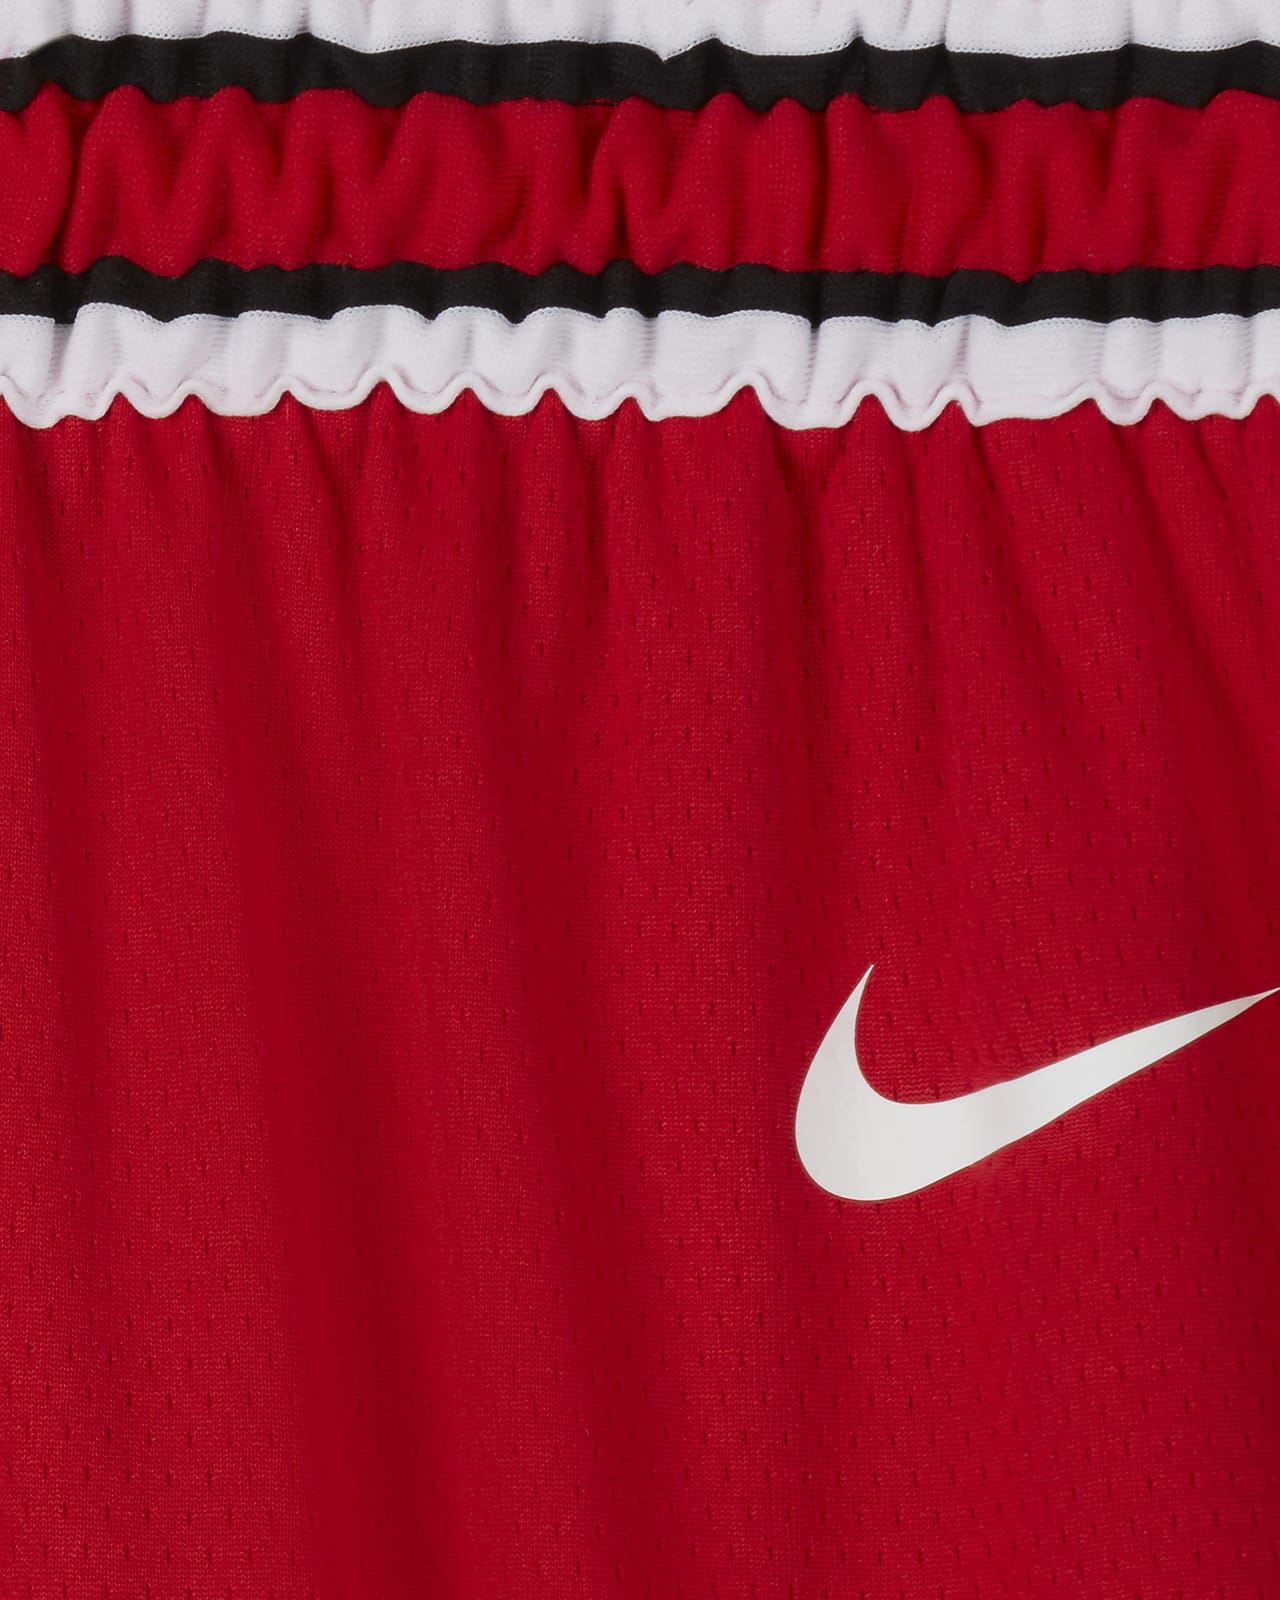 Lo siento caja registradora Sembrar Chicago Bulls Icon Edition Men's Nike NBA Swingman Shorts. Nike IL